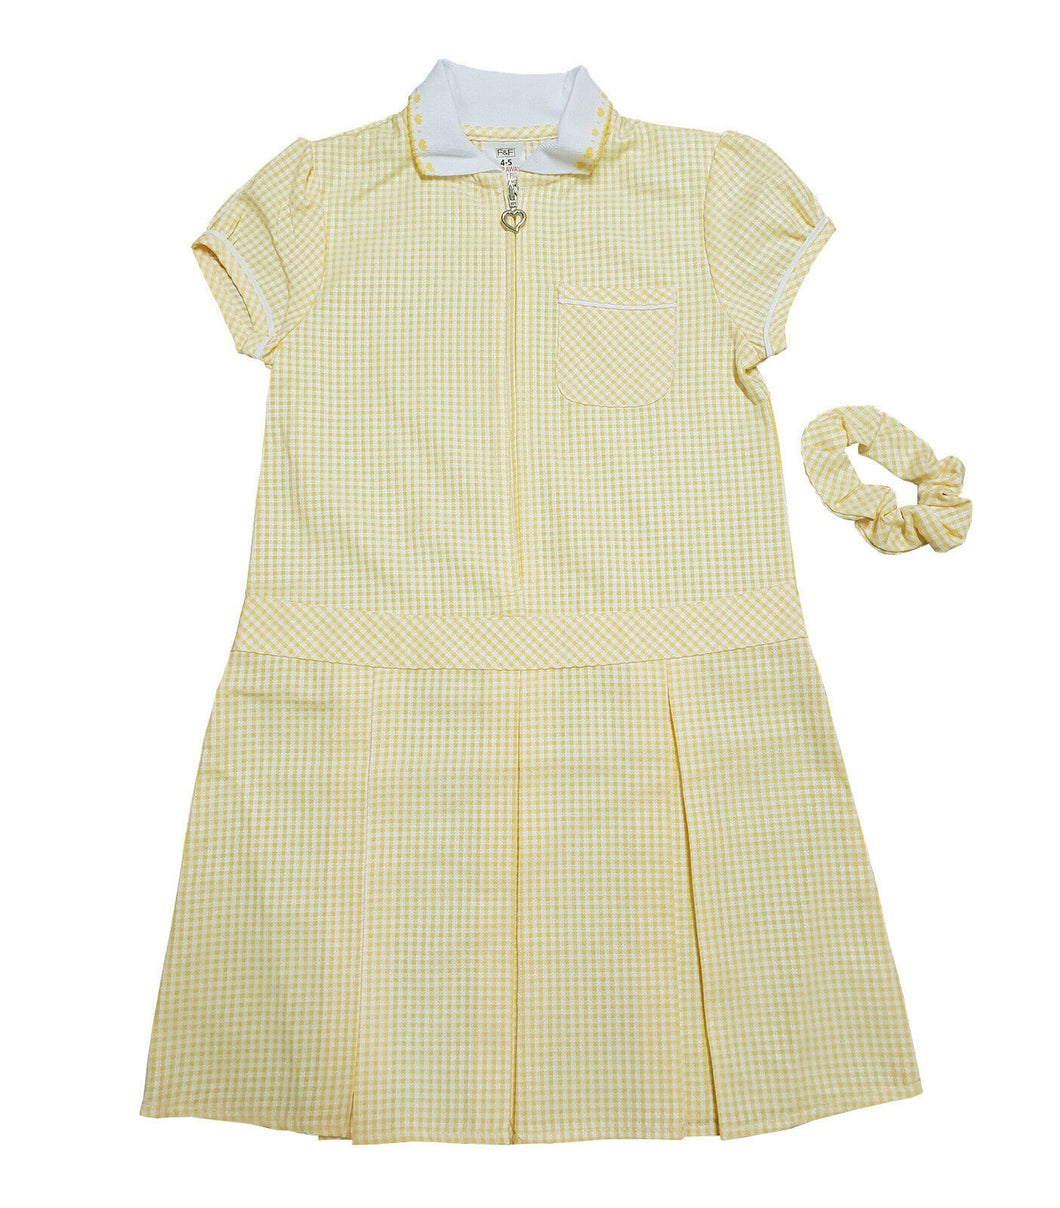 Girls Yellow Heart Print Collar Gingham Check School Dress + Hair Bobble